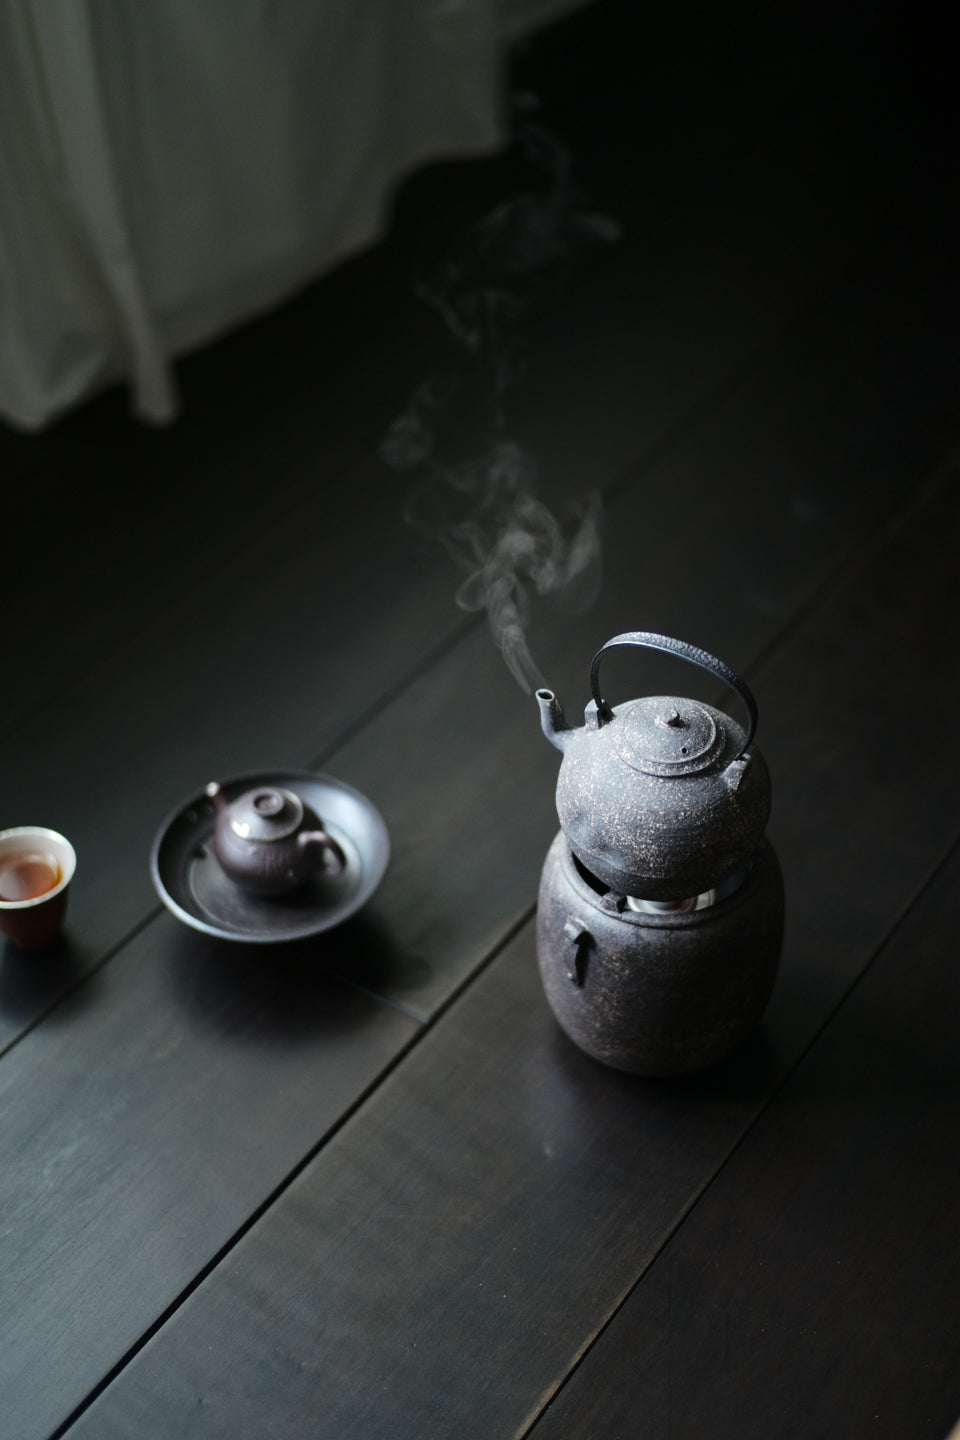 Natural Earth Sanwan 3-Bend Neck Tea Kettle by Cheng Wei